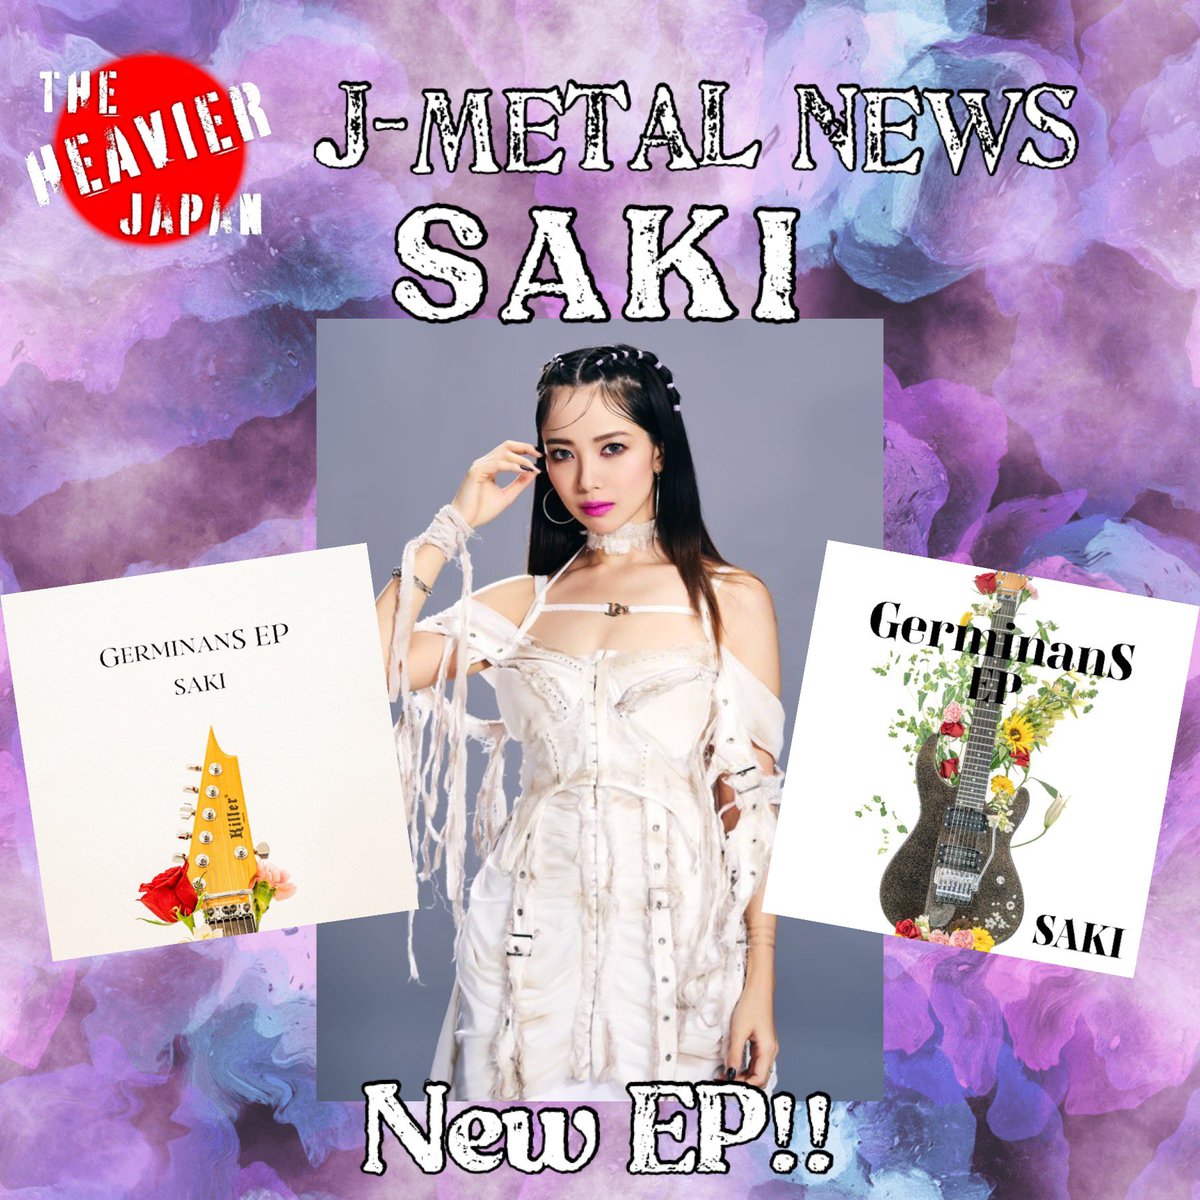 #jmetalnews
ex-NEMOPHILA guitarist SAKI announces the release of her first solo EP titled “GERMINANS EP” on June 21st!!

@_chakixx_ 

#japanesemetal
#jrock #jmetal
#heavymetal
#femalemetal